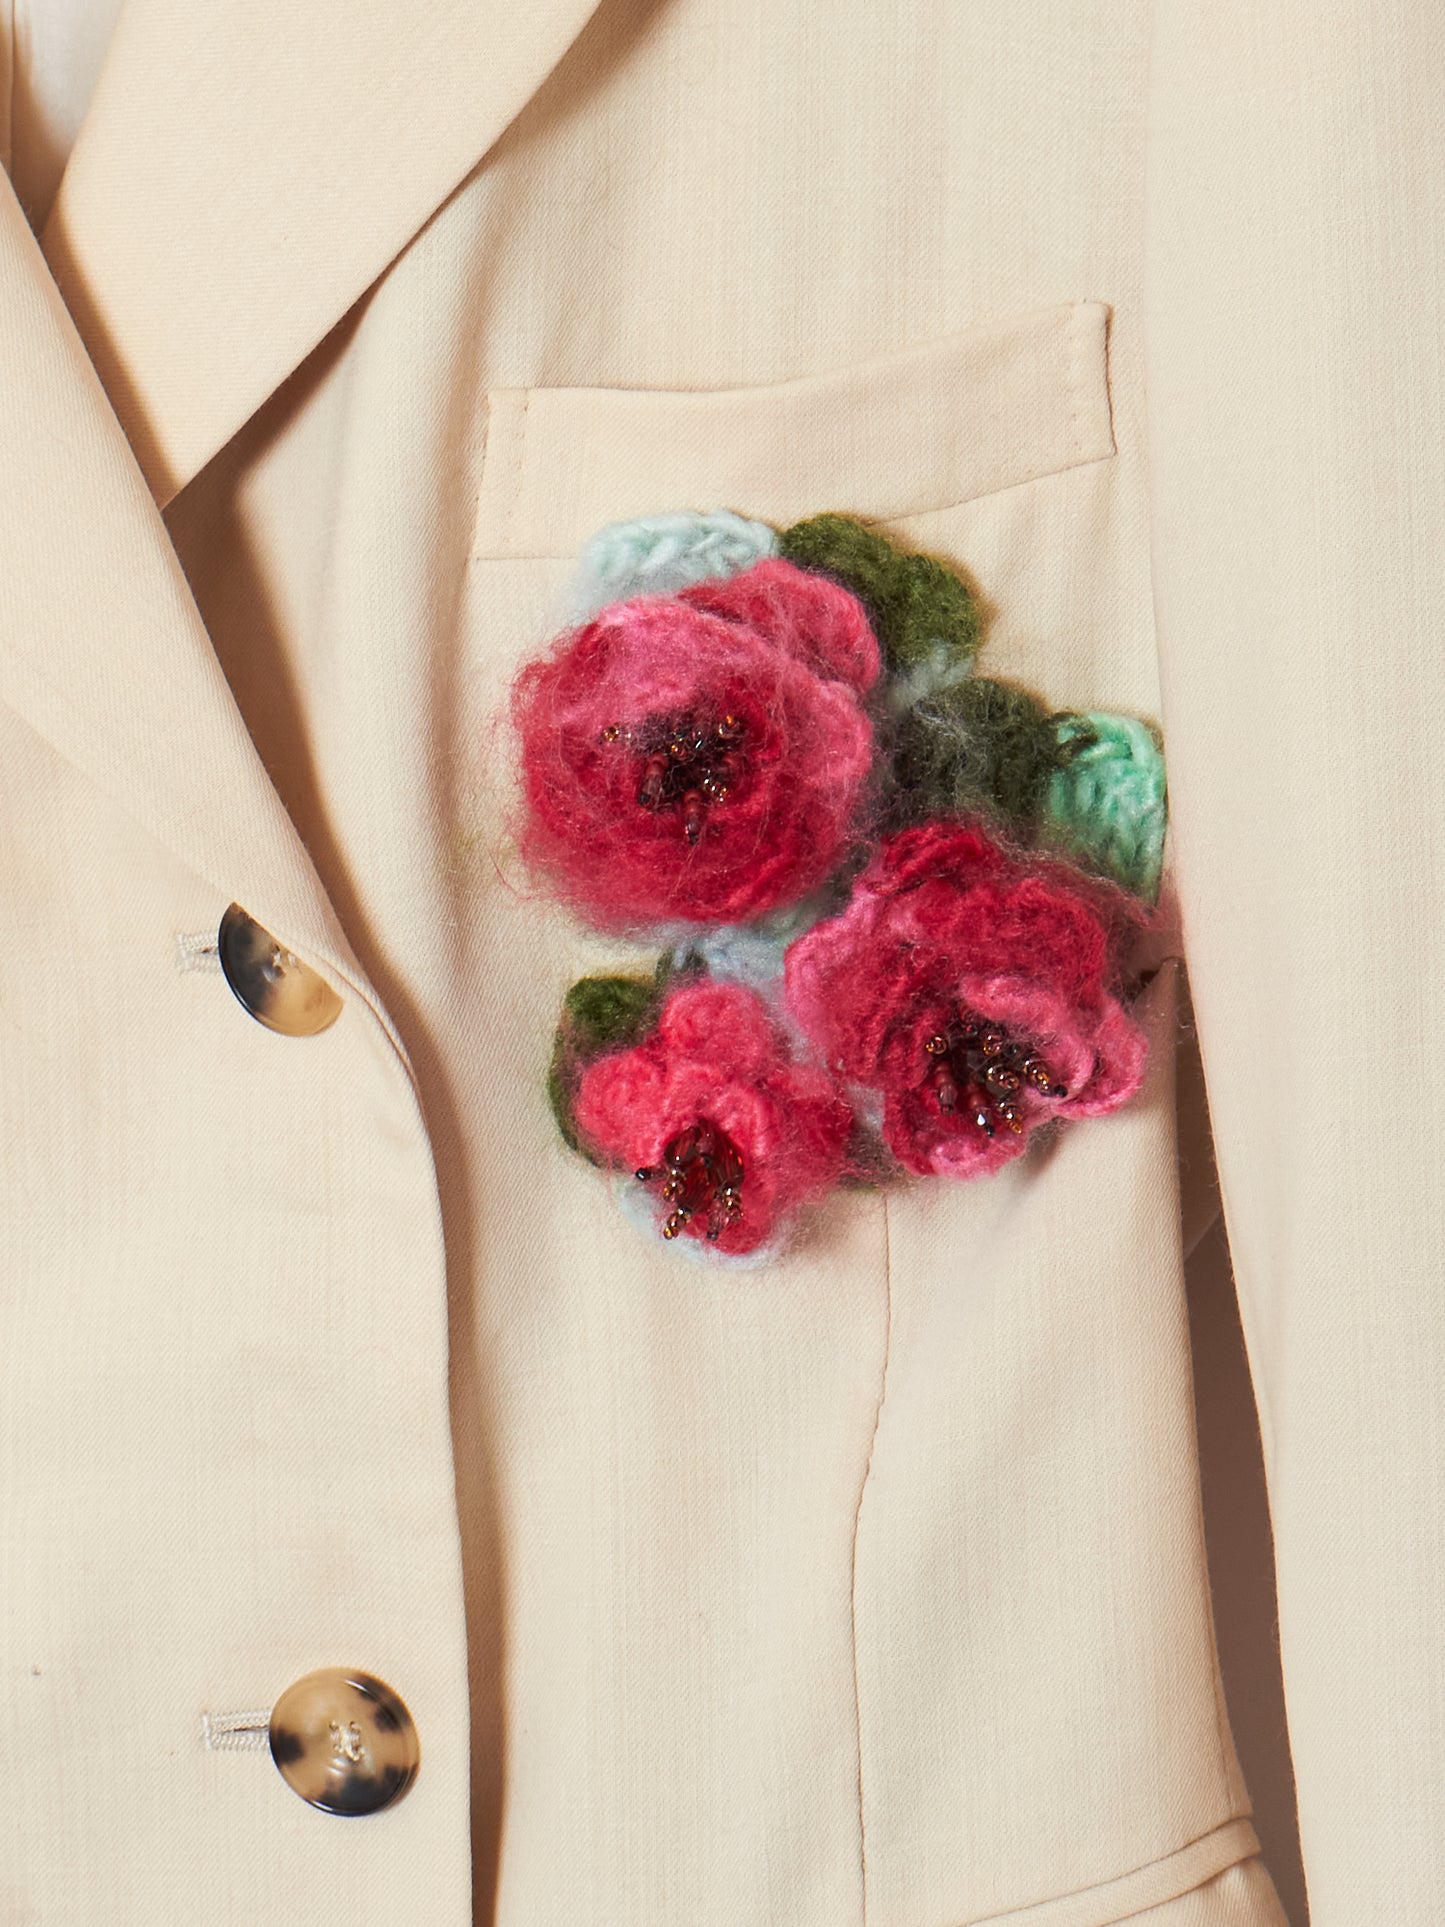 rose motif beige jaket